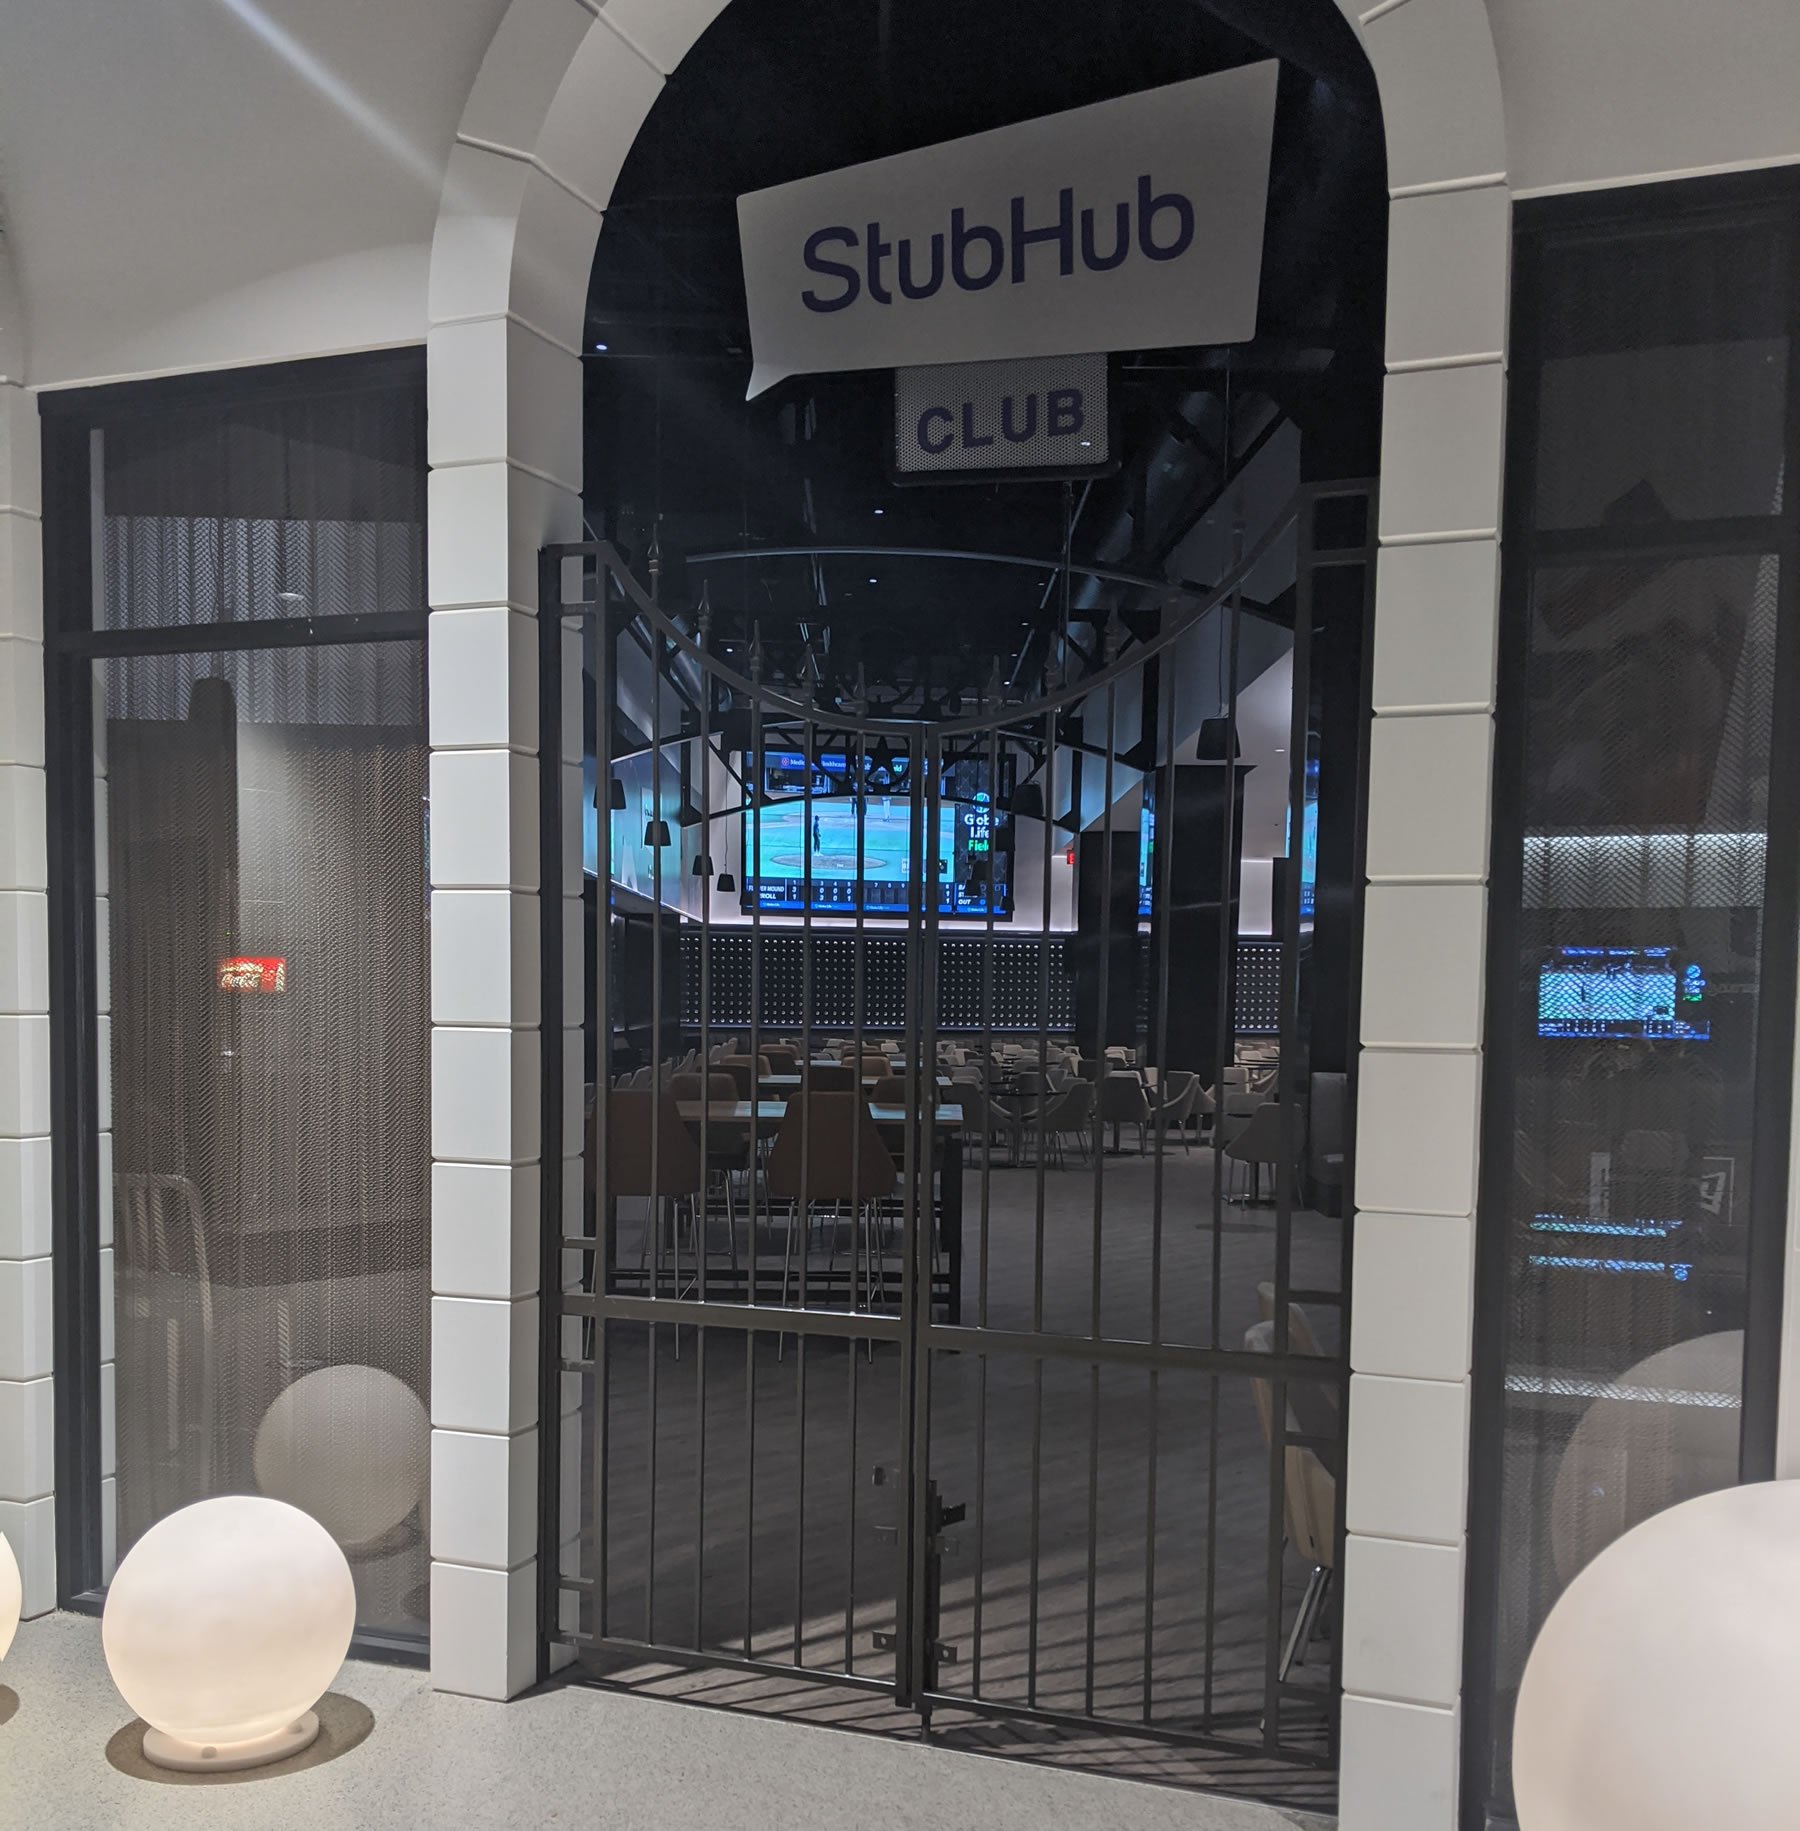 stubhub club entrance